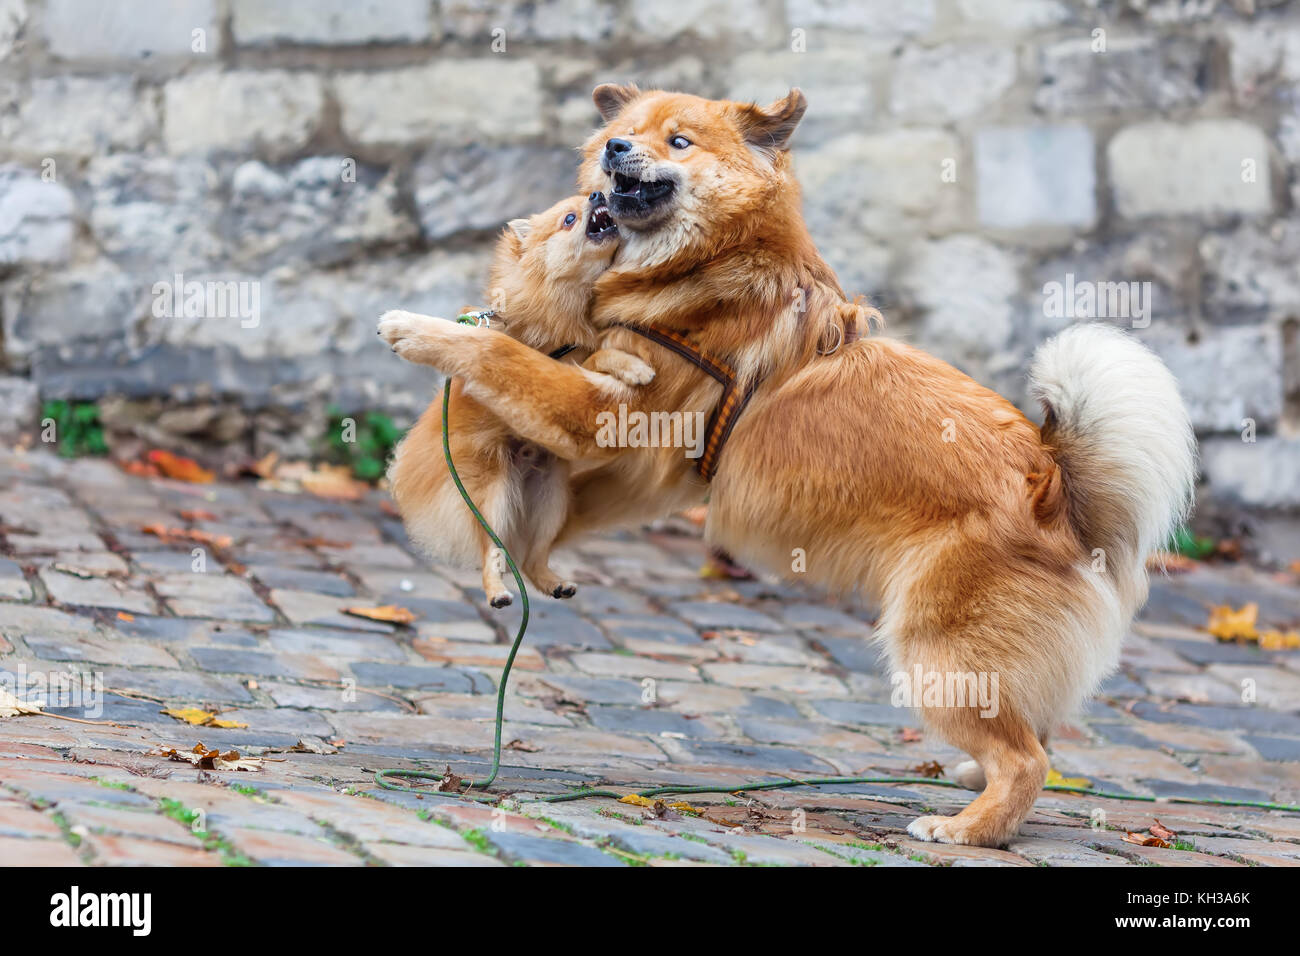 cute elo dog and pomerian dog play on a cobblestone road Stock Photo